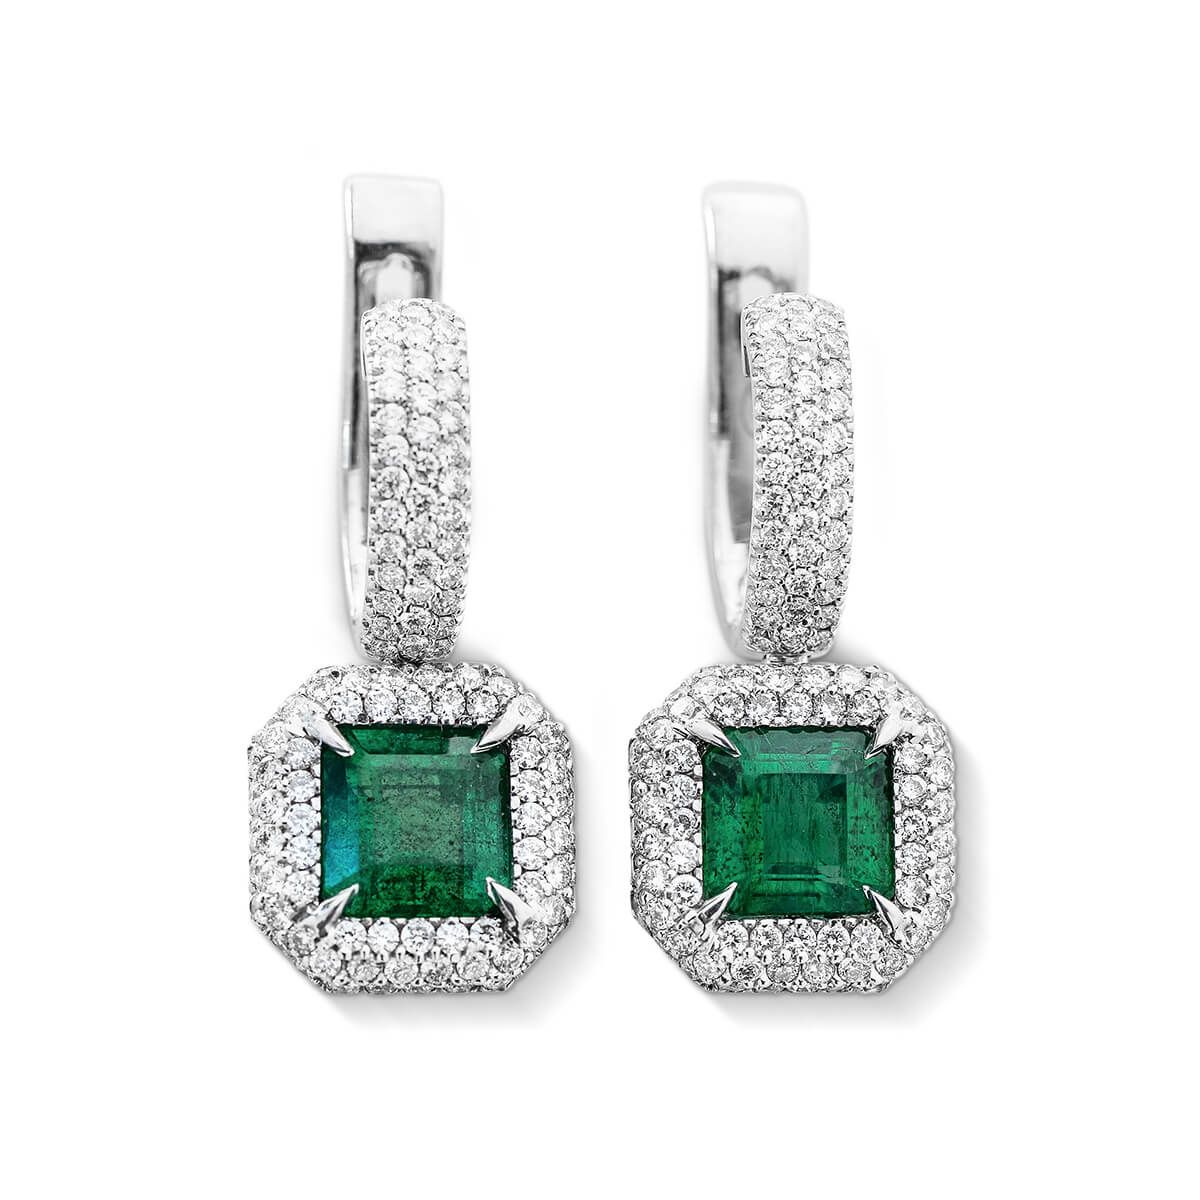 Natural Green Emerald Earrings, 4.49 Ct. TW, IGL Certified, J86402831IL, Unheated